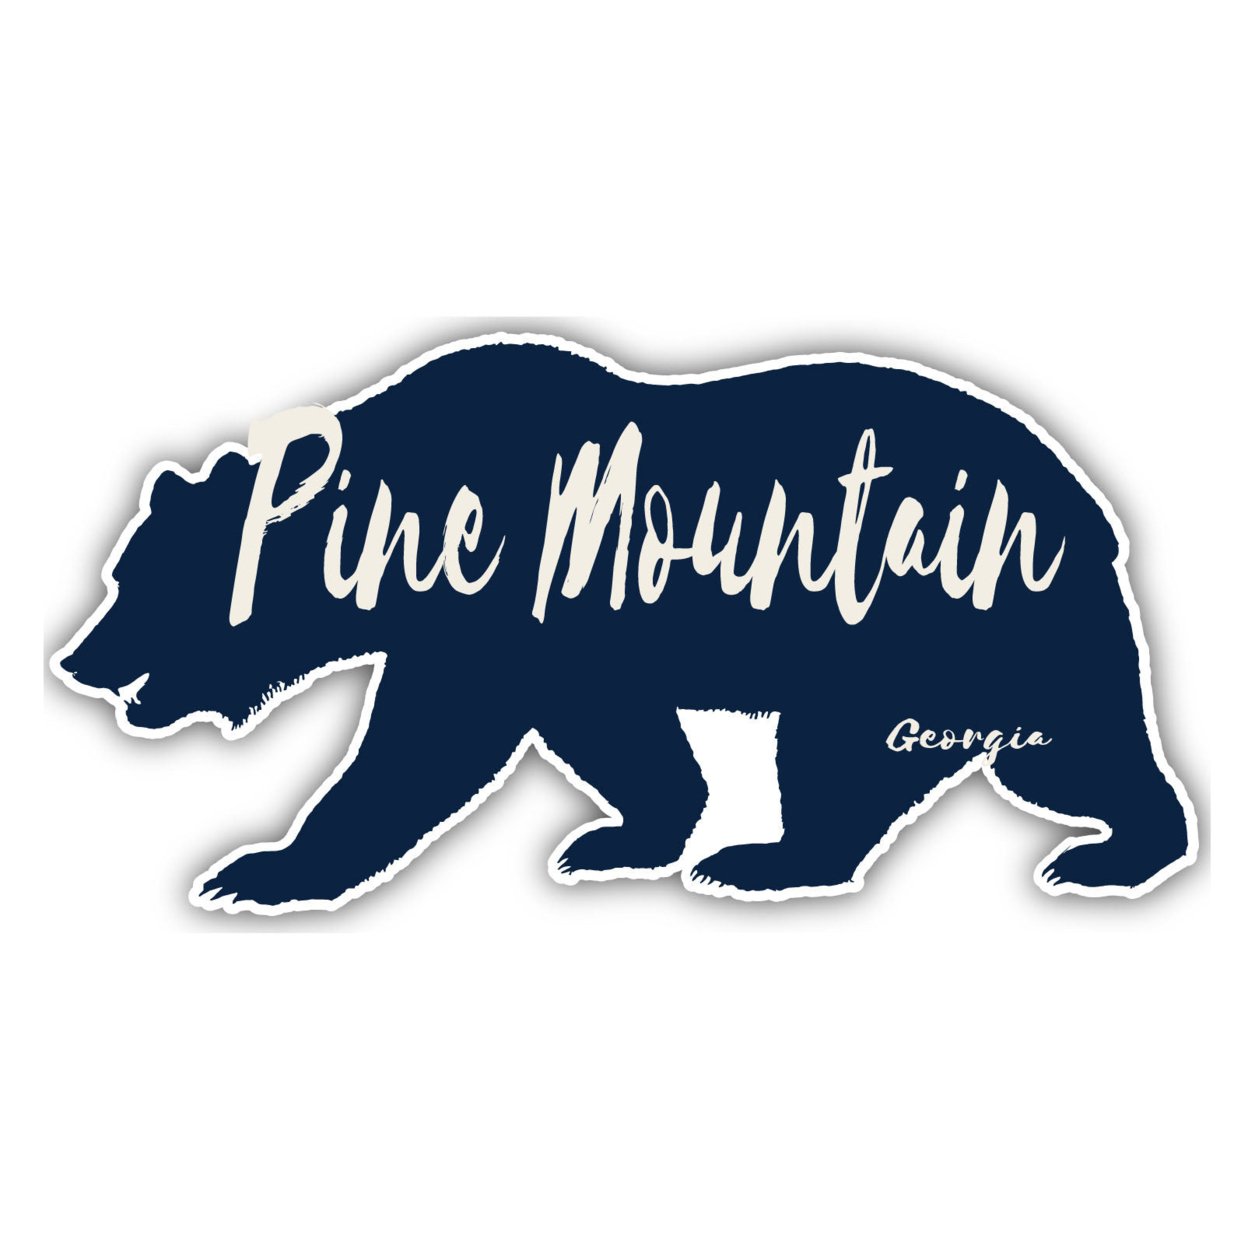 Pine Mountain Georgia Souvenir Decorative Stickers (Choose Theme And Size) - Single Unit, 4-Inch, Tent